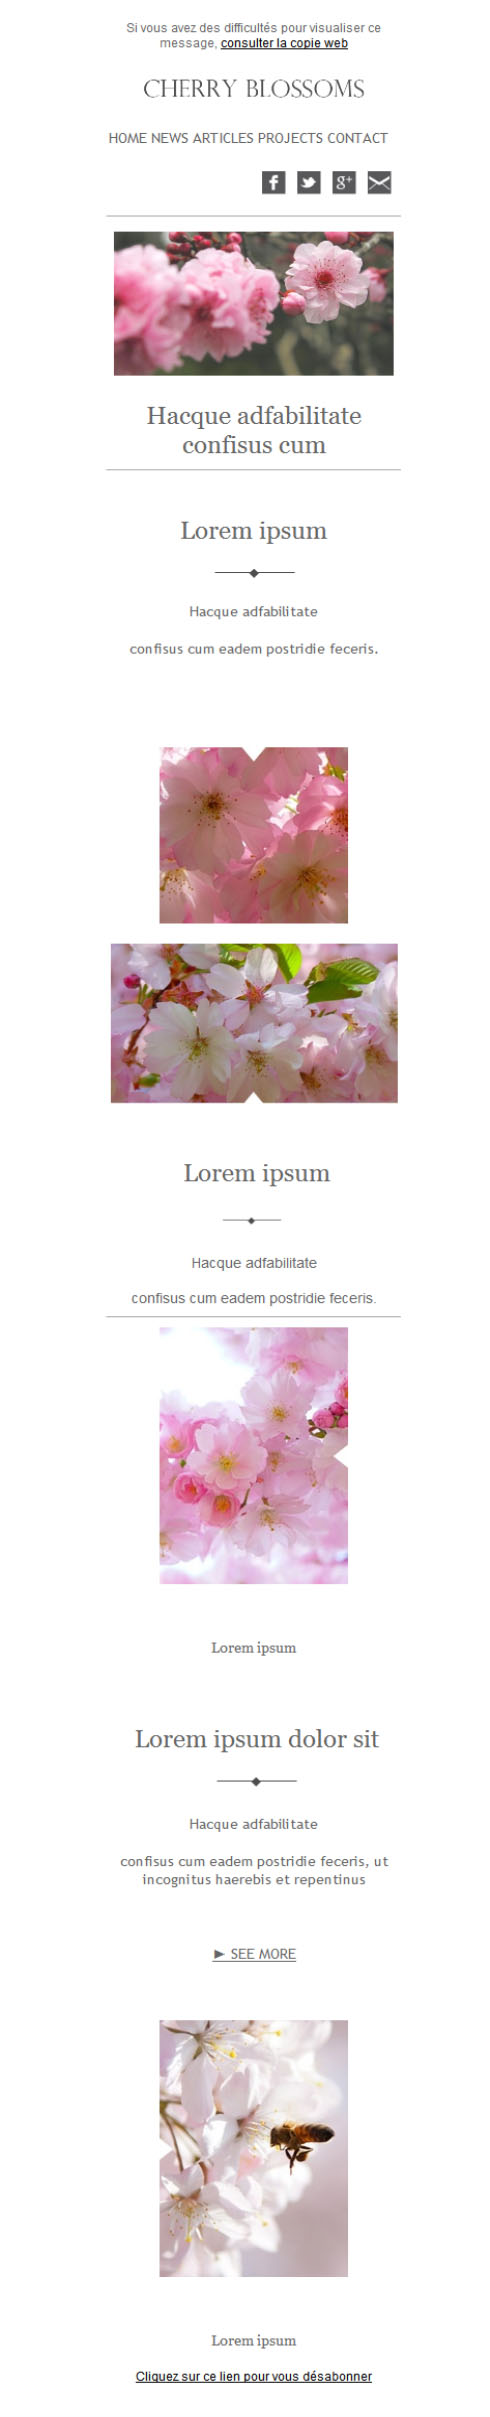 Templates Emailing CherryBlossoms Sarbacane